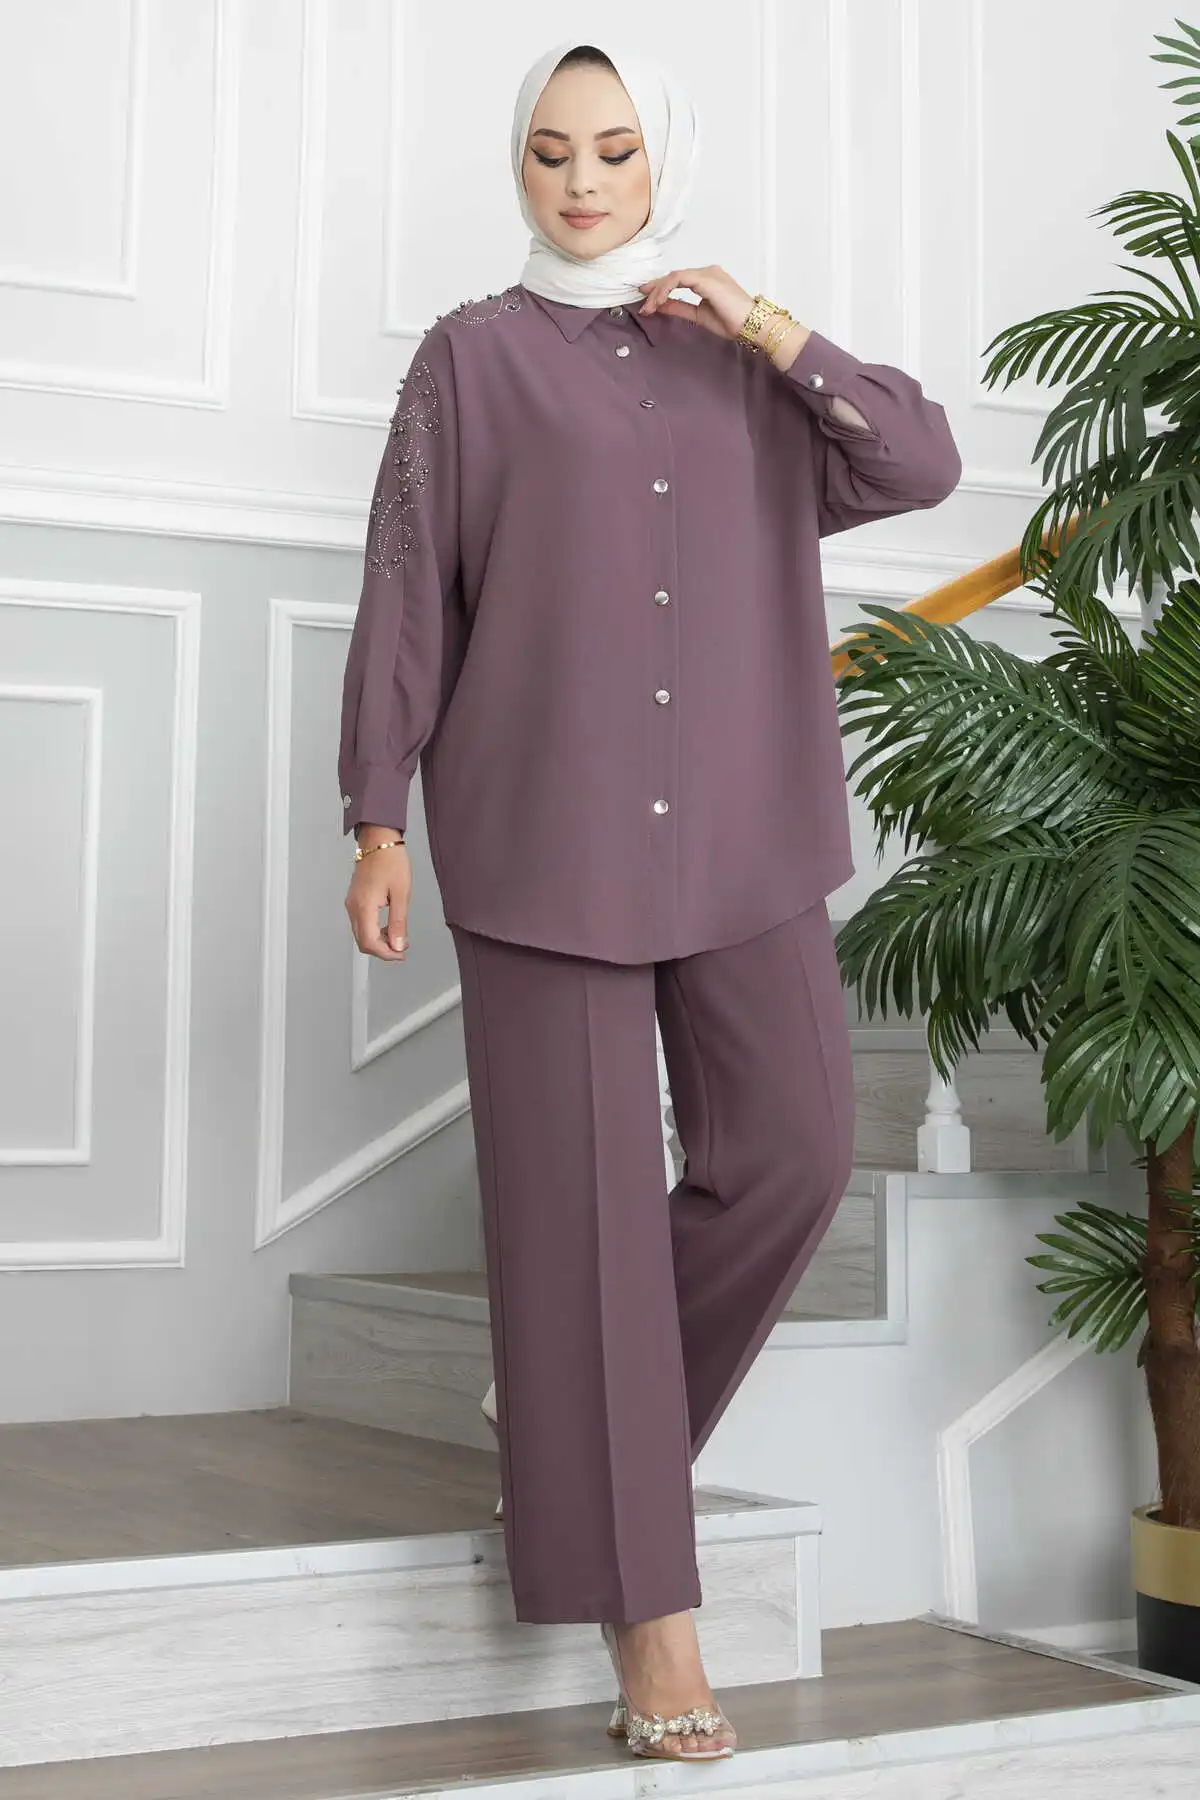 Women's Clothing Stone Detailed Hijab Set Abaya Summer For 2 Pieces Robe Femme Musulmane Muslim Fashion Islamic Jilbab Long Dress